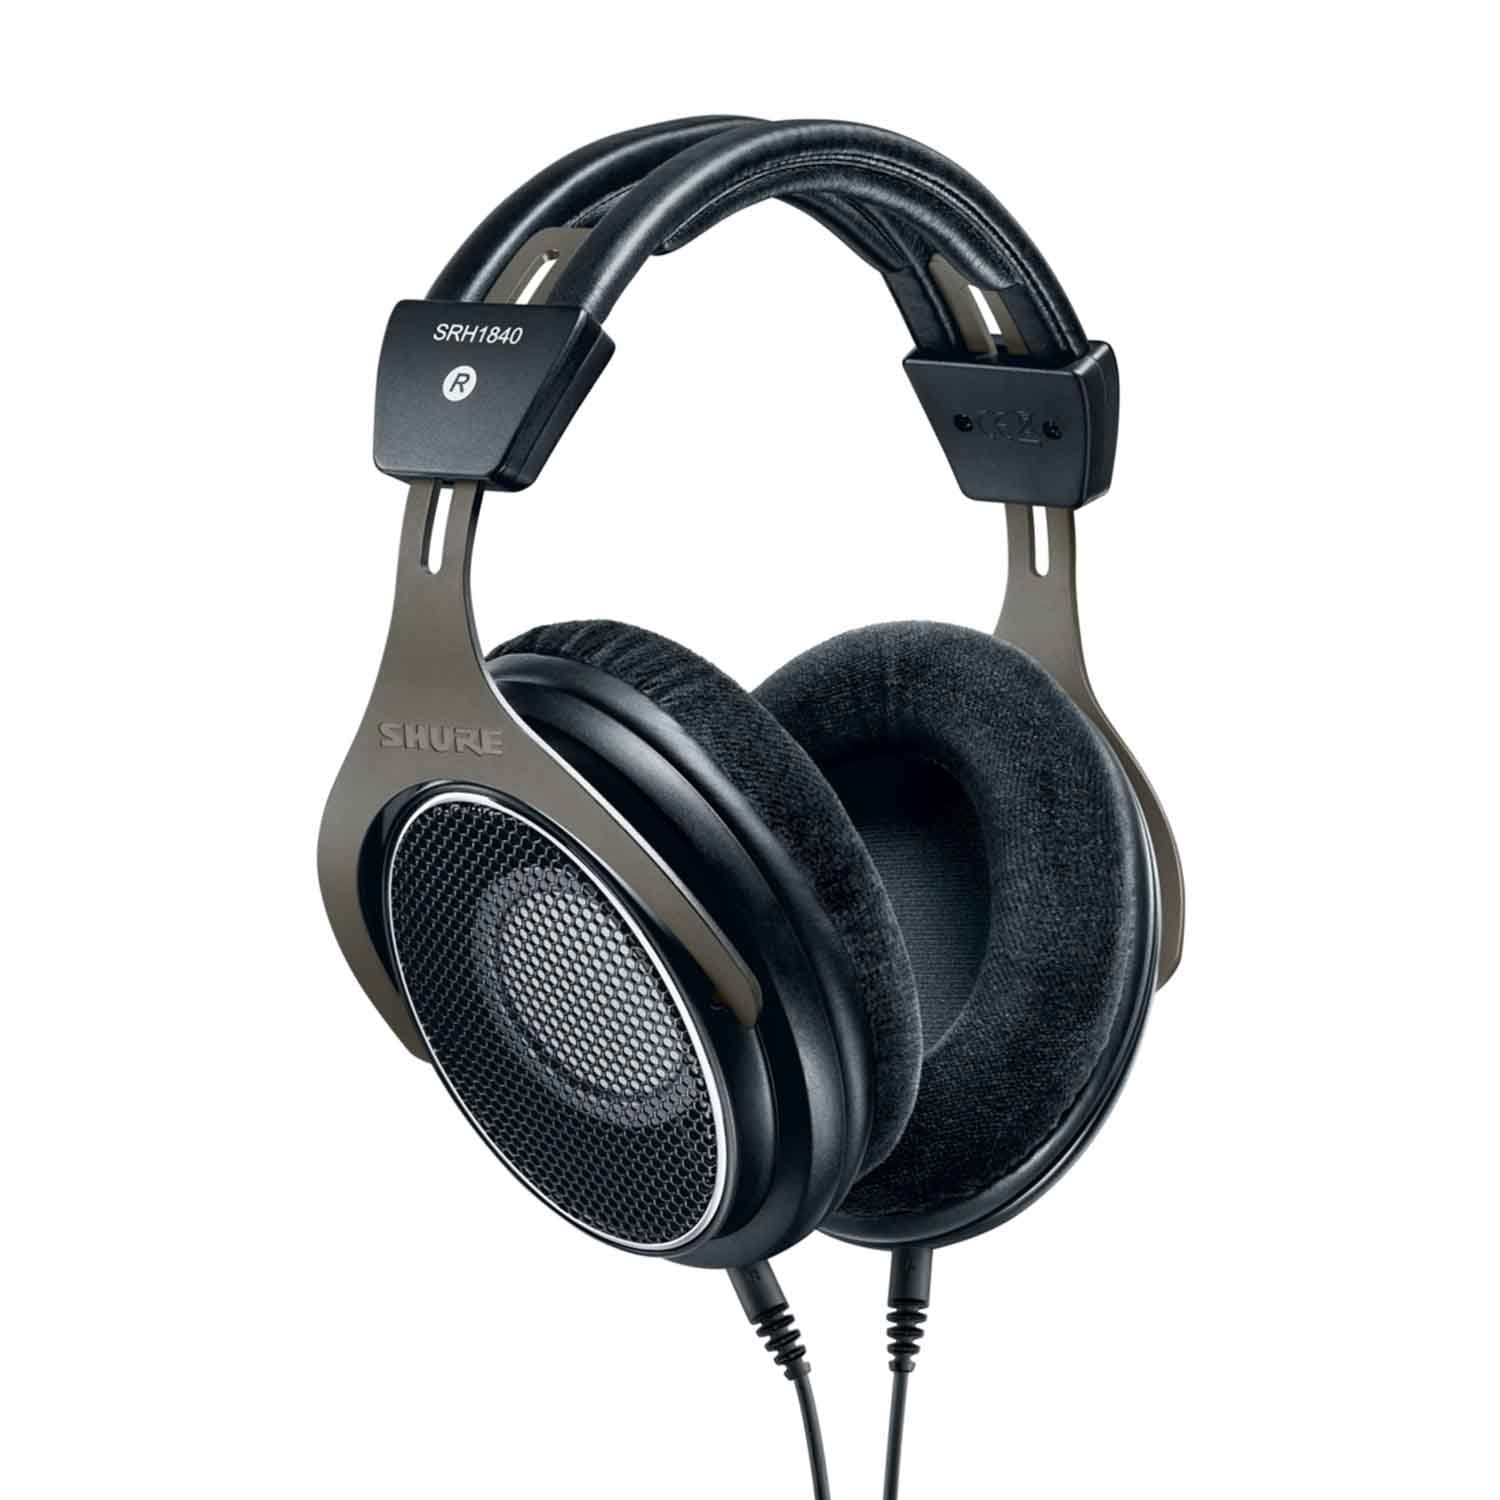 B-Stock: Shure SRH1840, Professional Open Back Studio Headphones - Hollywood DJ